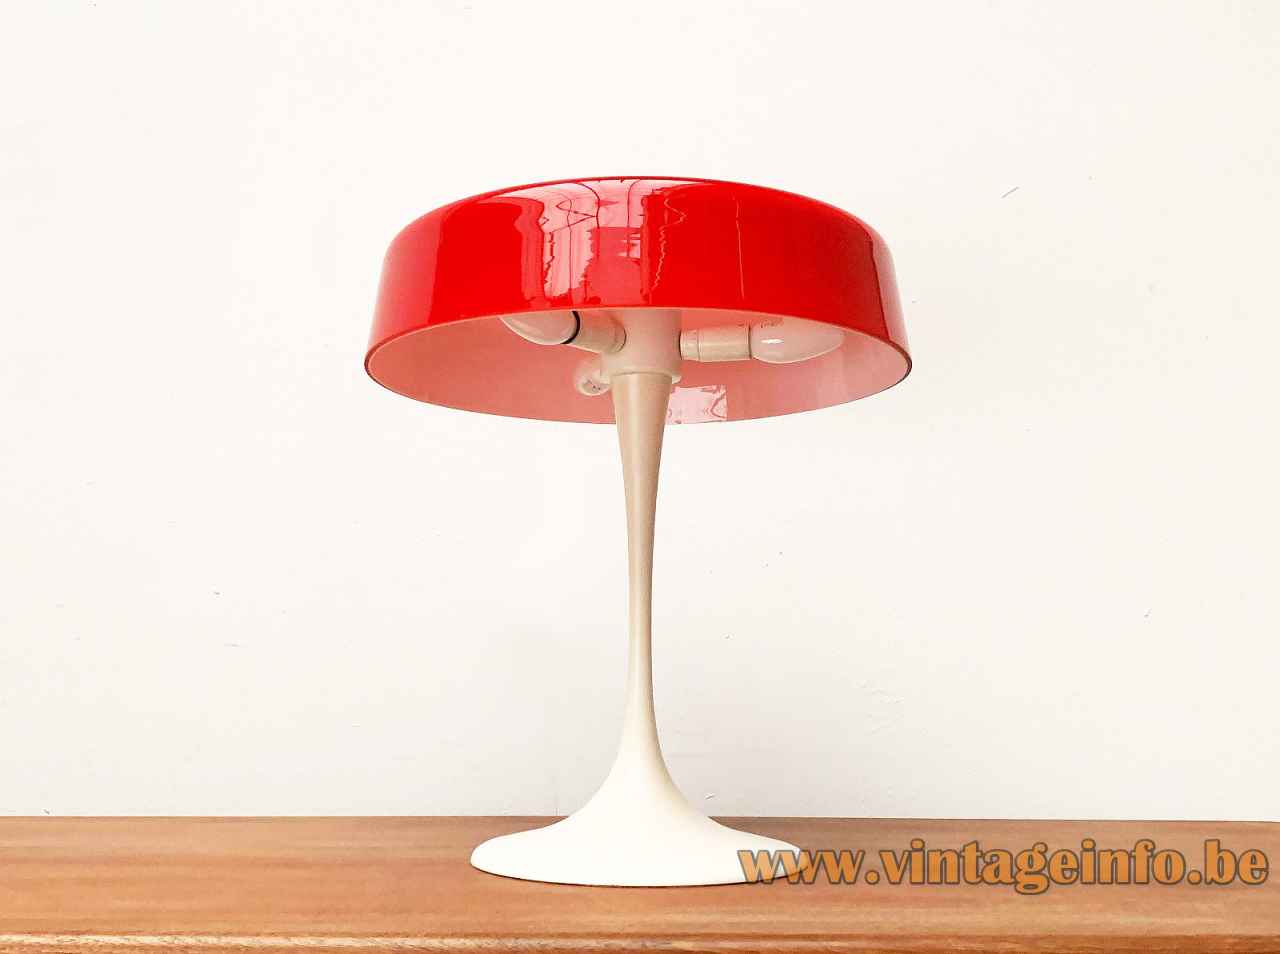 Temde mushroom table lamp white trumpet base red glass lampshade 1960s 1970s Germany Switzerland E14 sockets